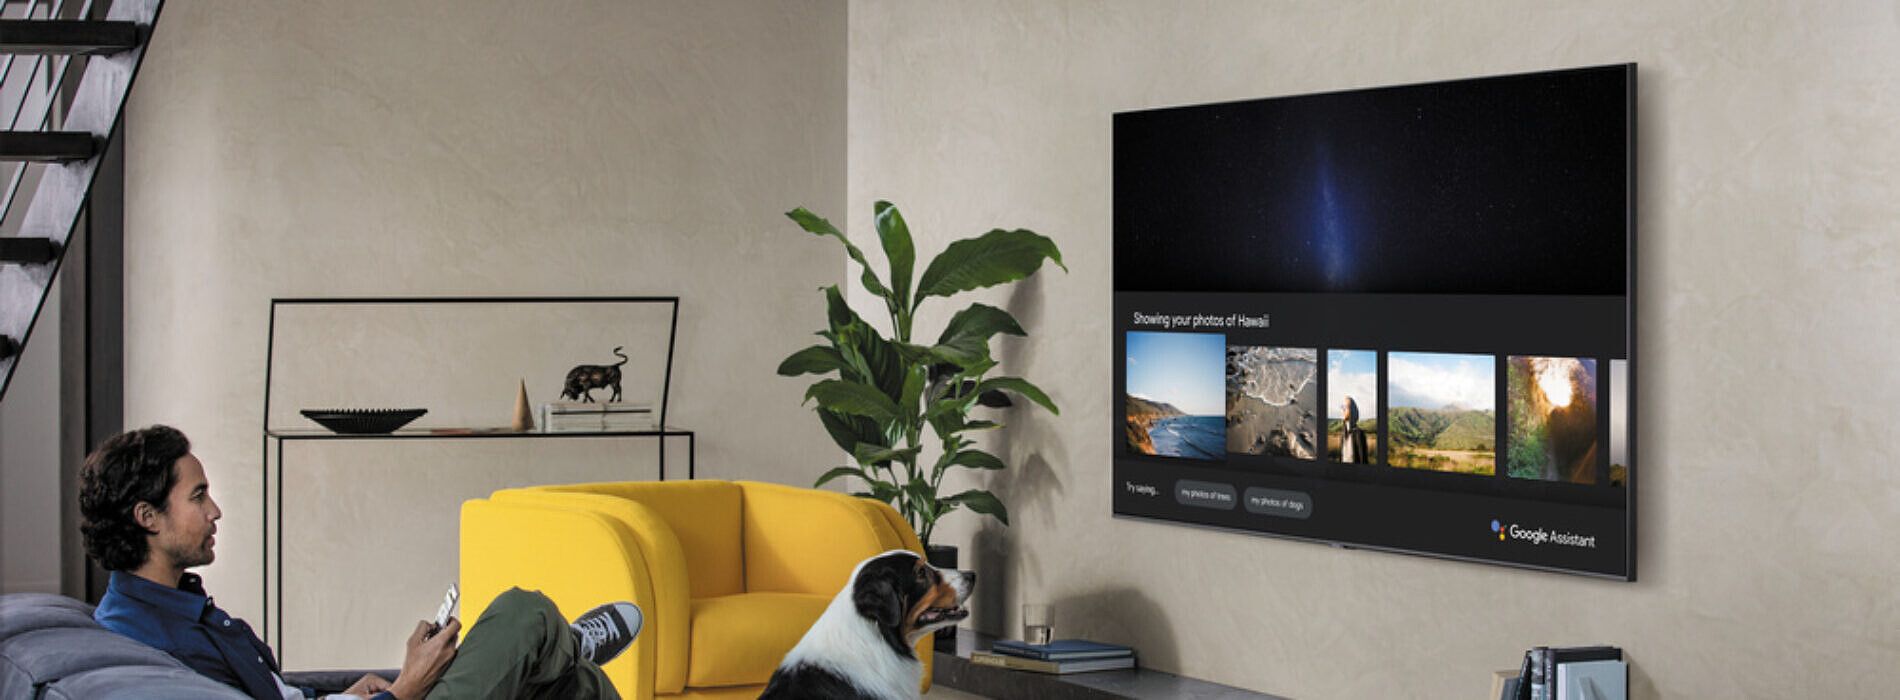 Google ассистент телевизор. Samsung Tizen 2020 телевизор. Samsung Tizen Home Assistant. Home Assistant Samsung TV. Модели ТВ самсунг с гугл ТВ.